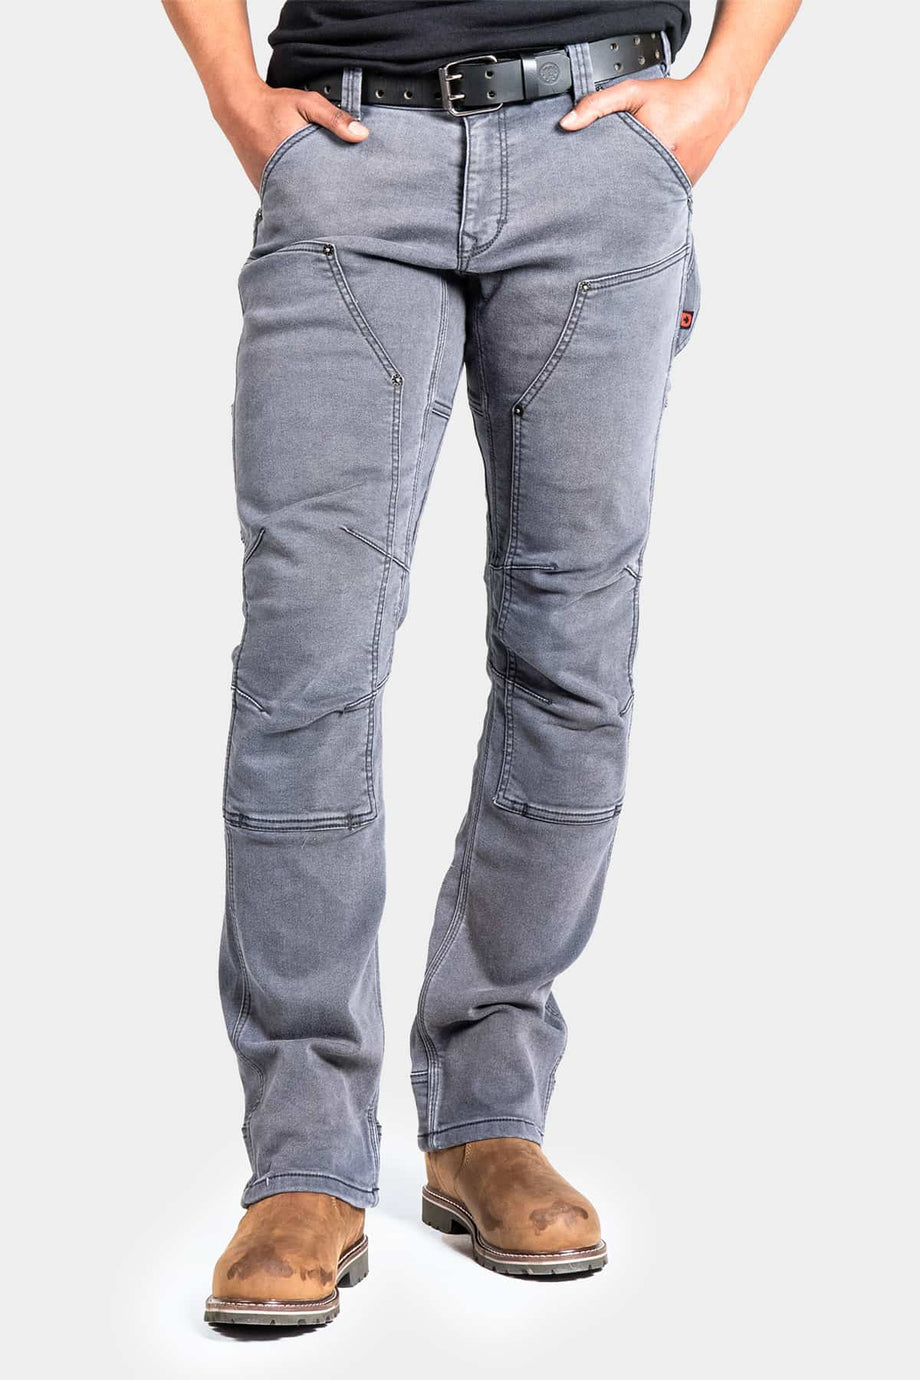 Dovetail Britt Utility Jeans Grey Thermal Denim